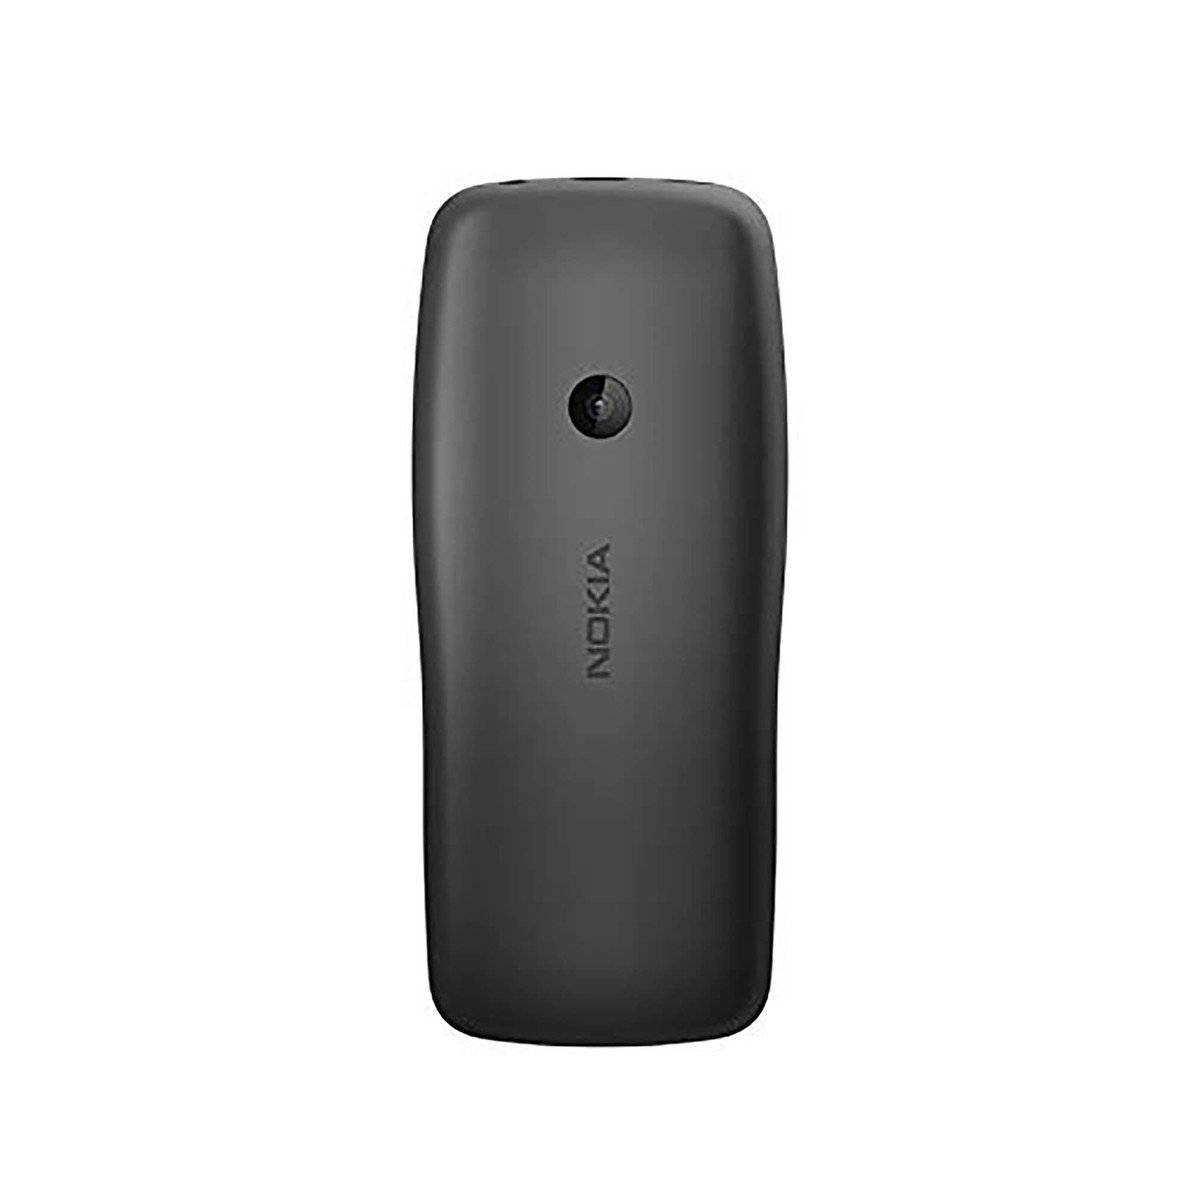 Nokia 110-TA1192 Dual SIM Black